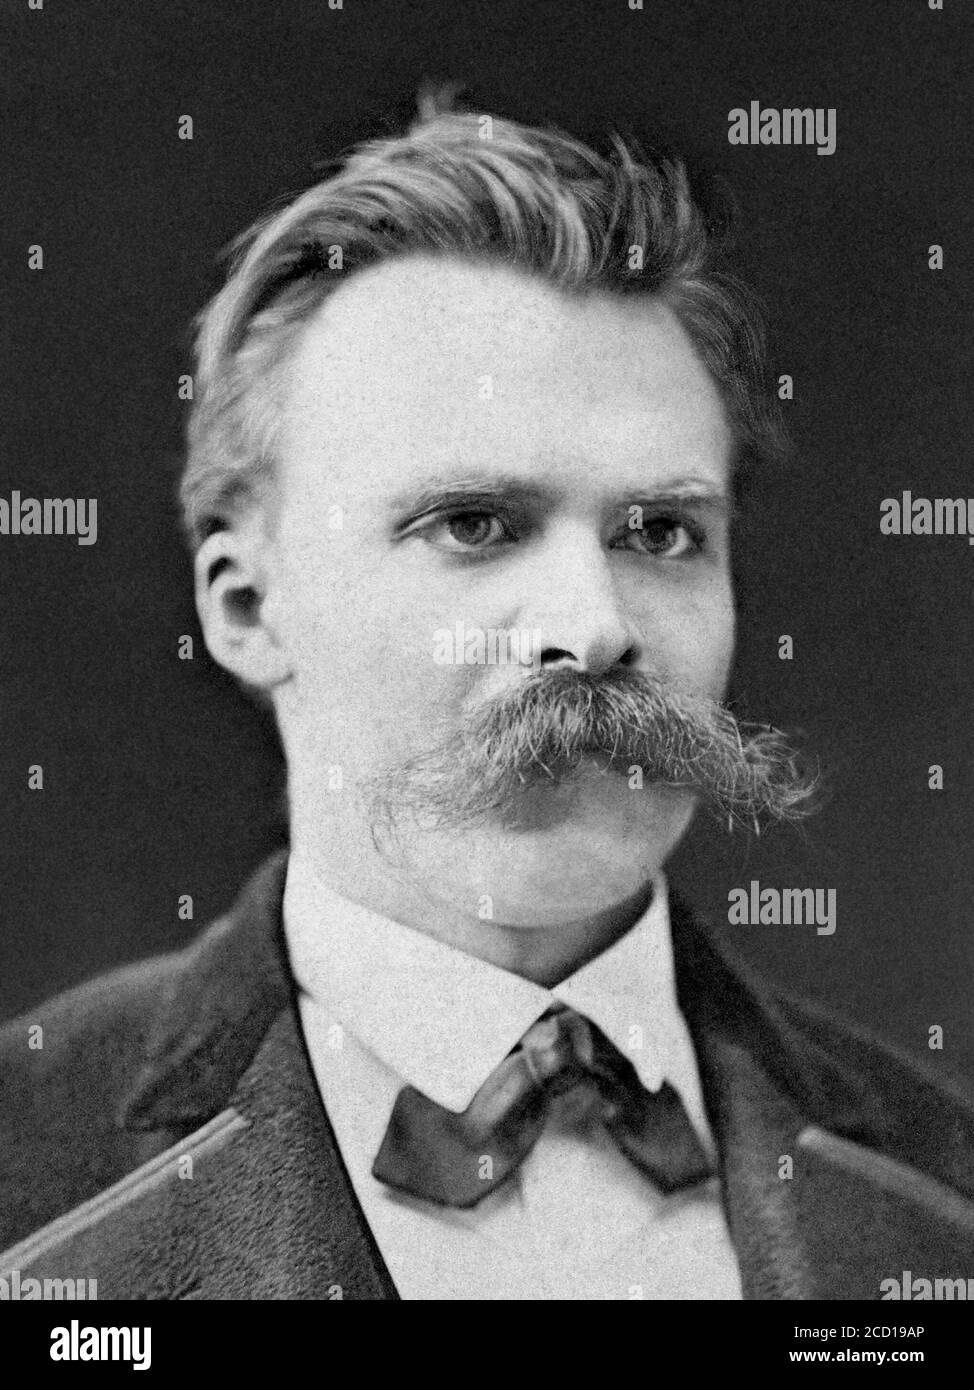 Nietzsche. Portrait de Friedrich Wilhelm Nietzsche (1844-1900) par Friedrich Hartmann, c.1875 Banque D'Images